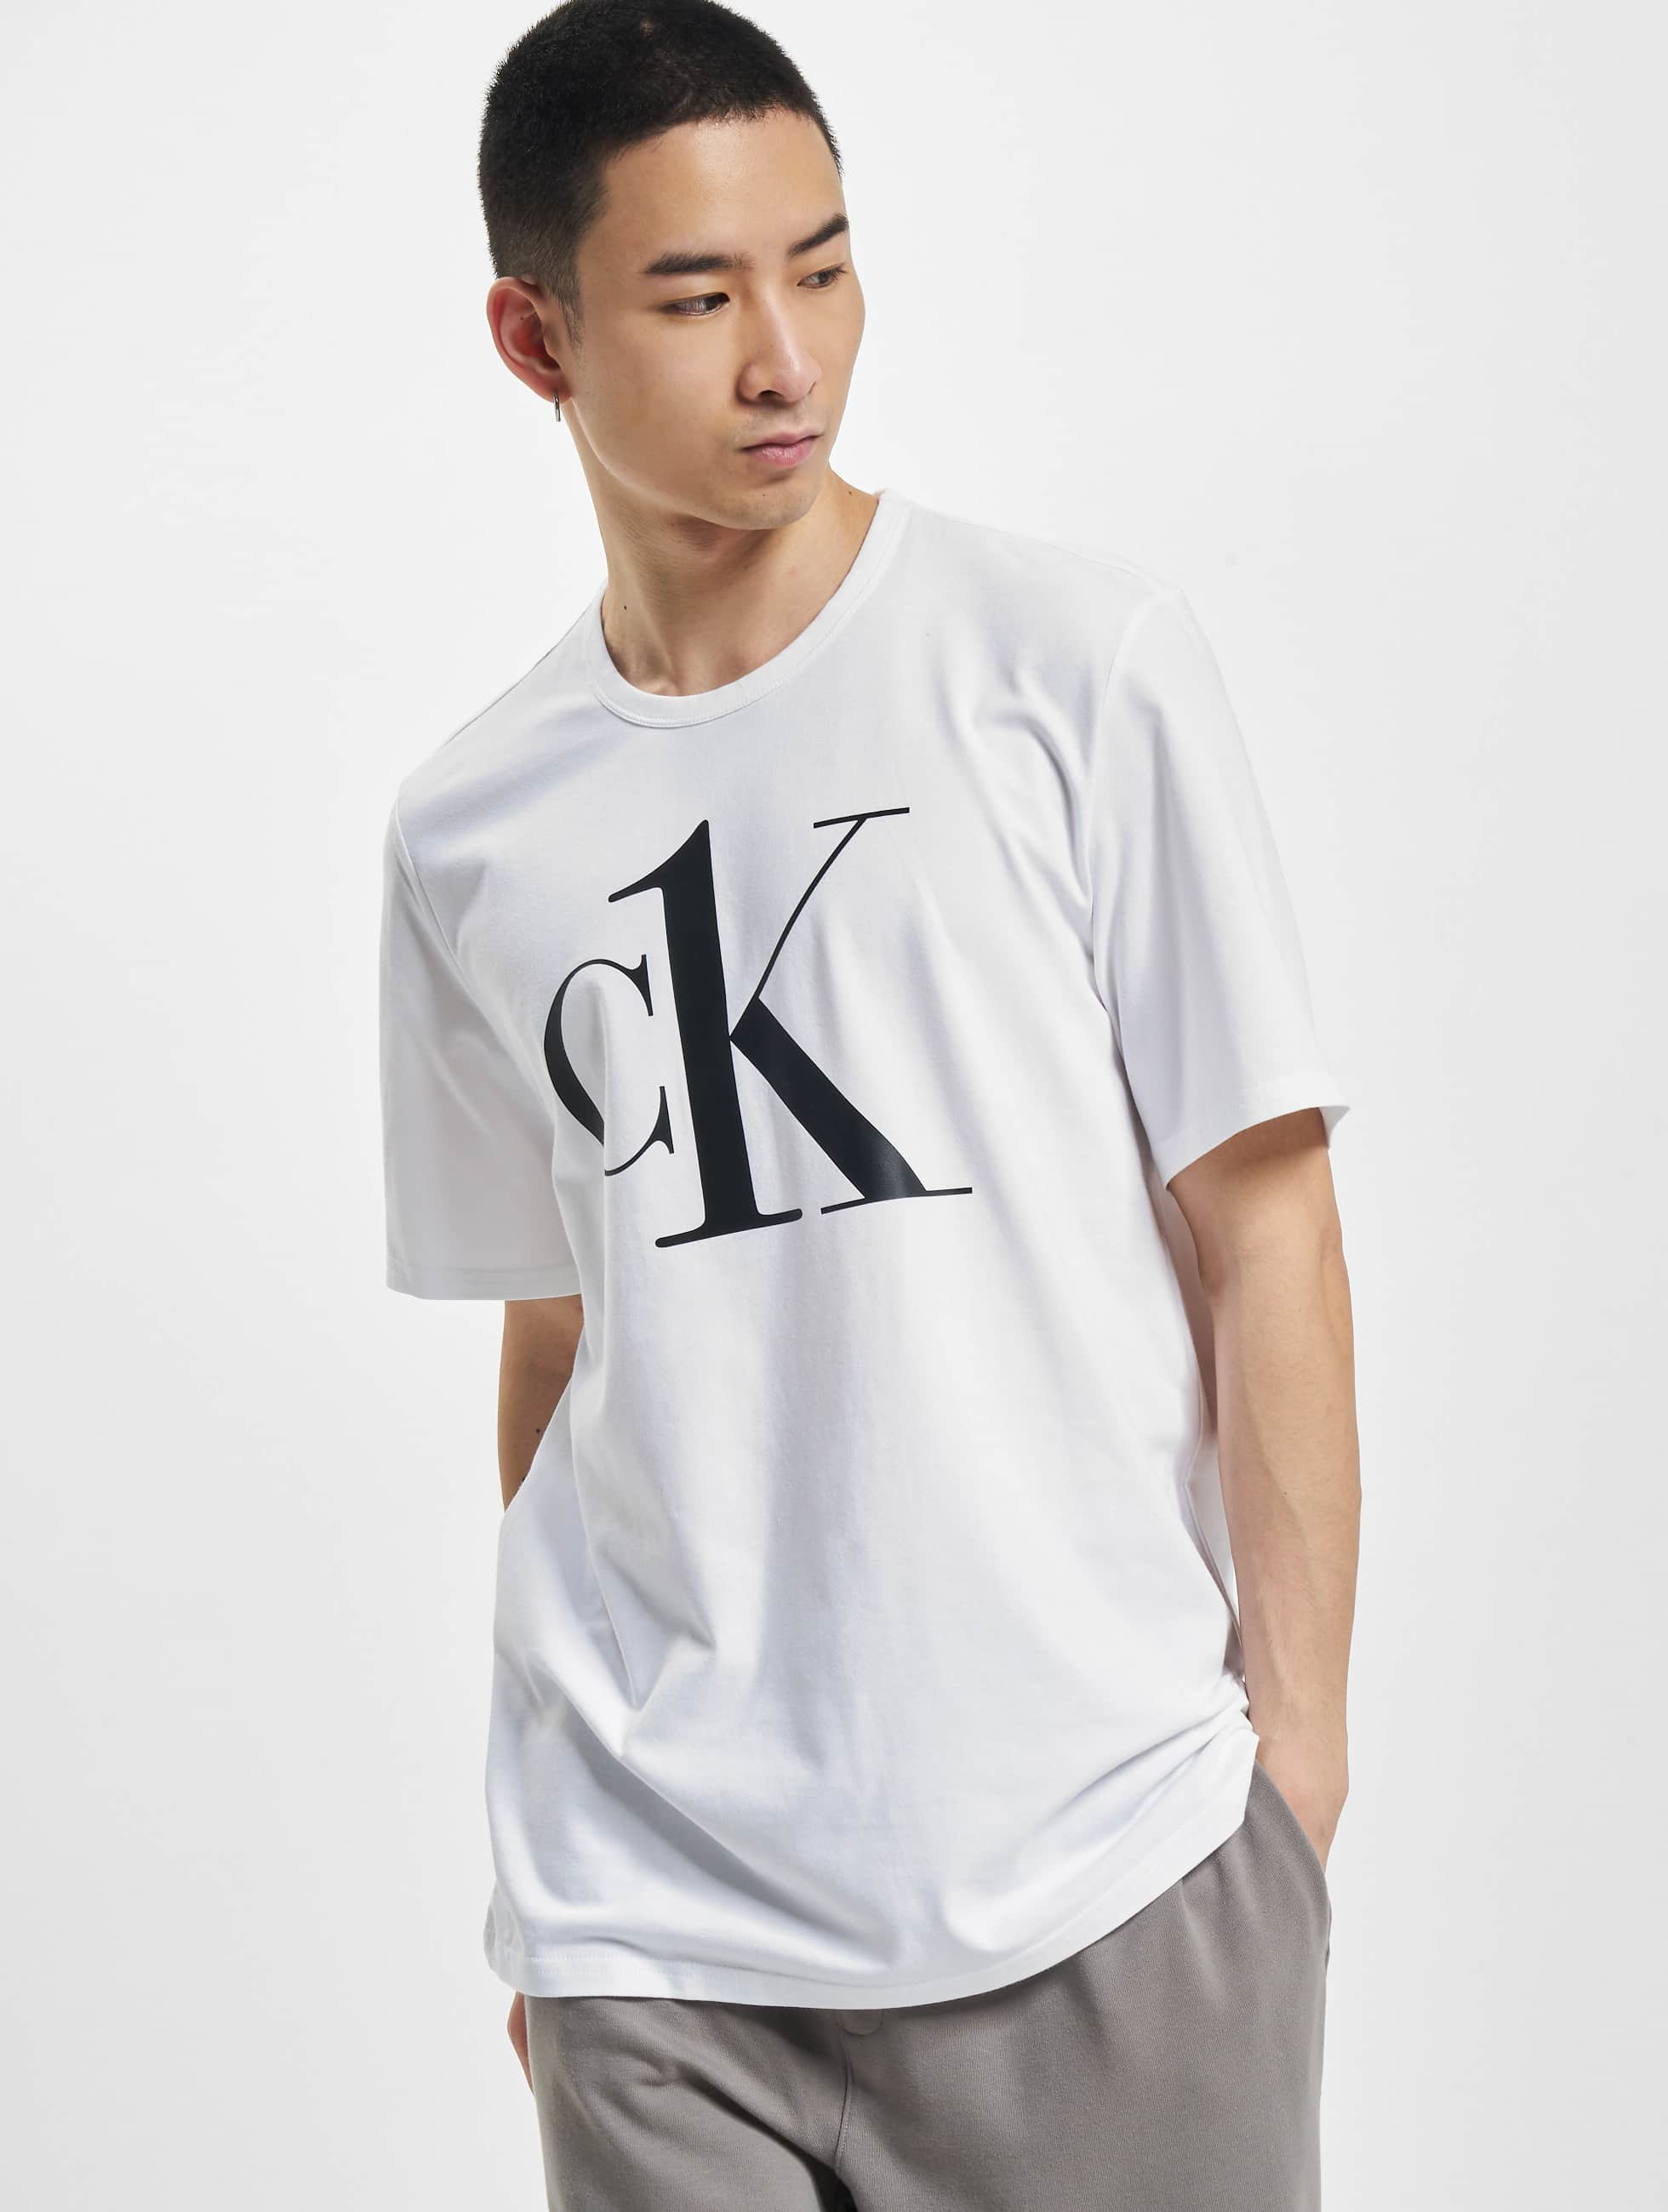 Vervoer Overtreden Kort geleden Calvin Klein bovenstuk / t-shirt Lounge in wit 972080